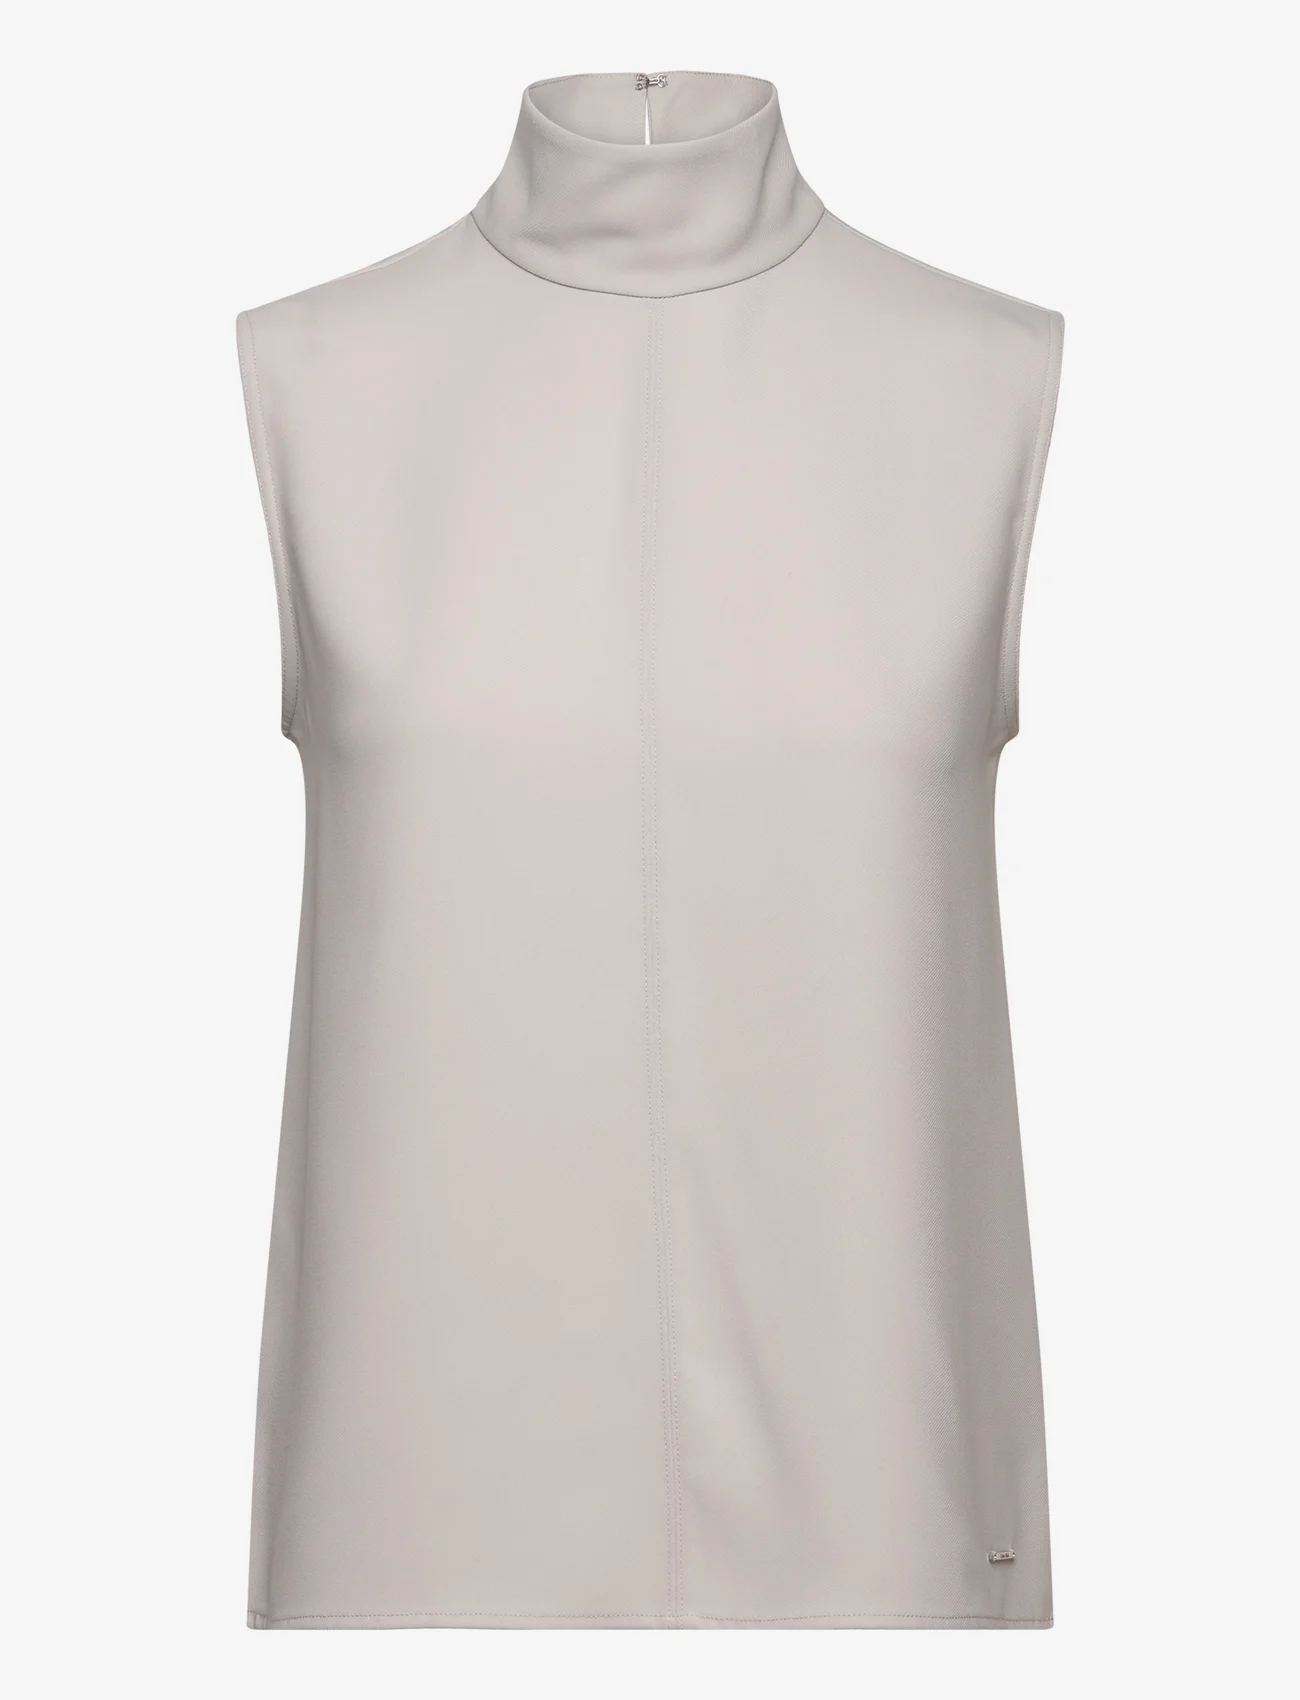 Calvin Klein - STRUCTURE TWLL NS MOCK NECK TOP - sleeveless tops - morning haze - 0